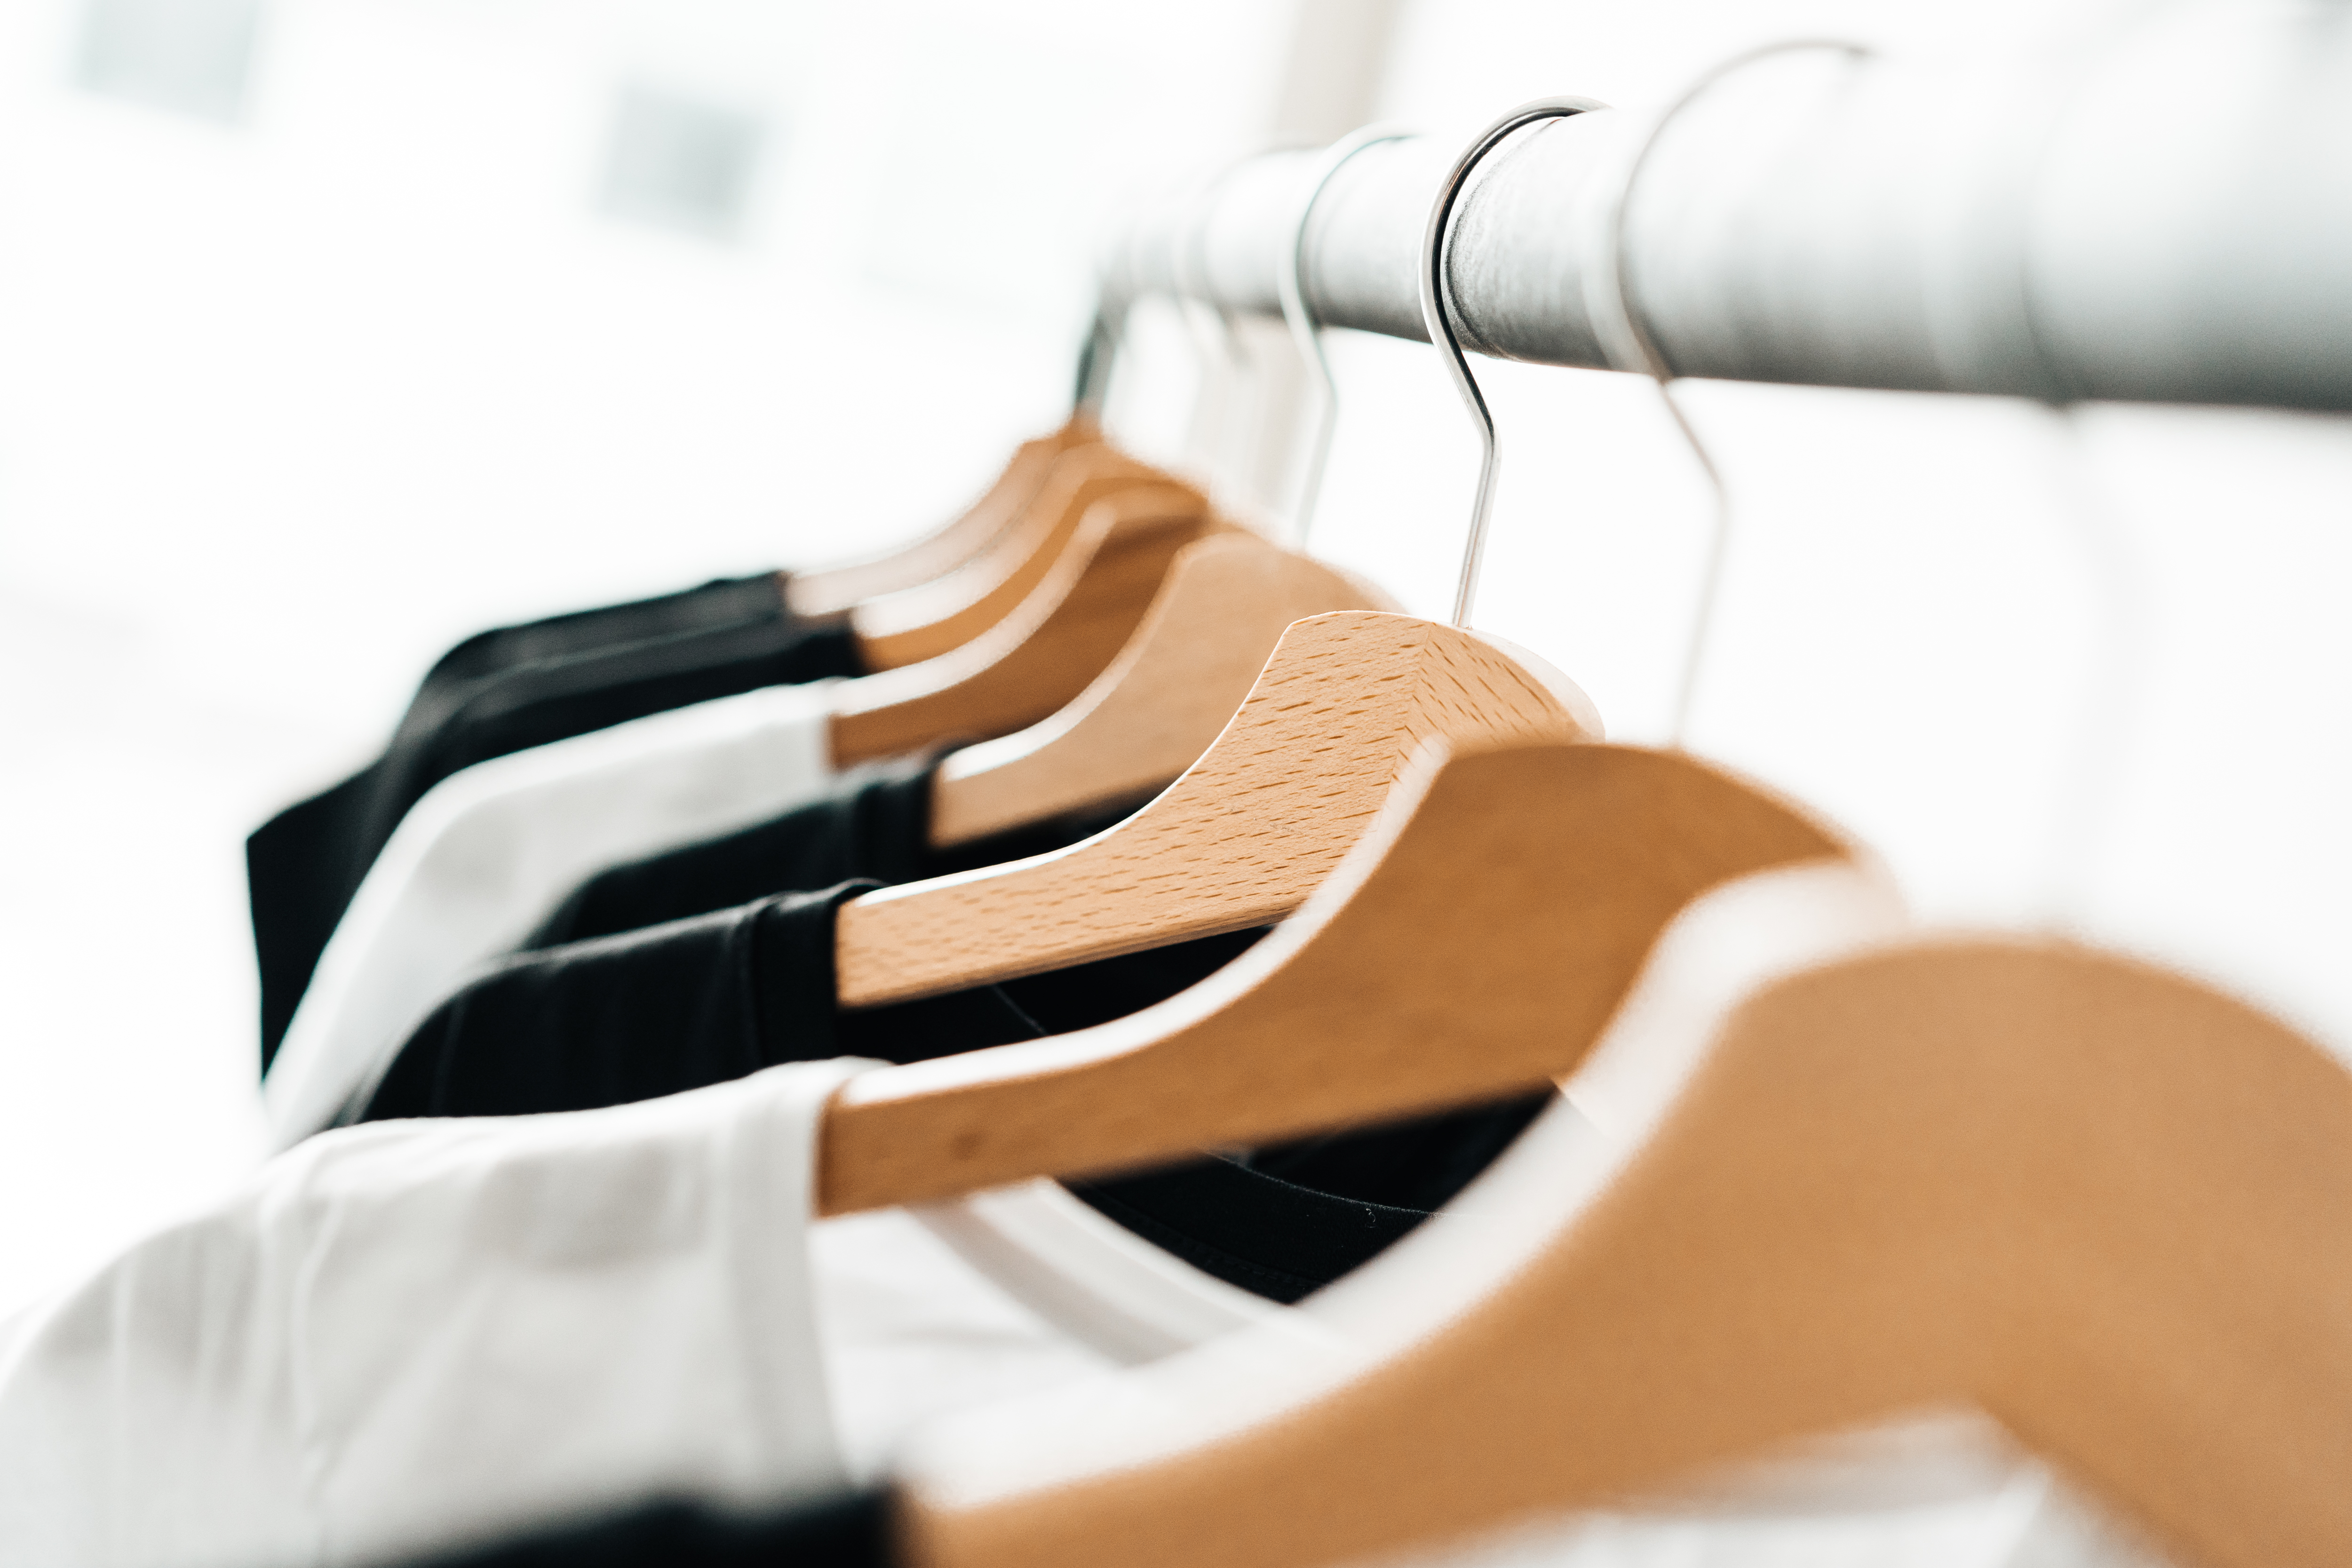 Cloth Hangers Shirts. Image & Photo (Free Trial)